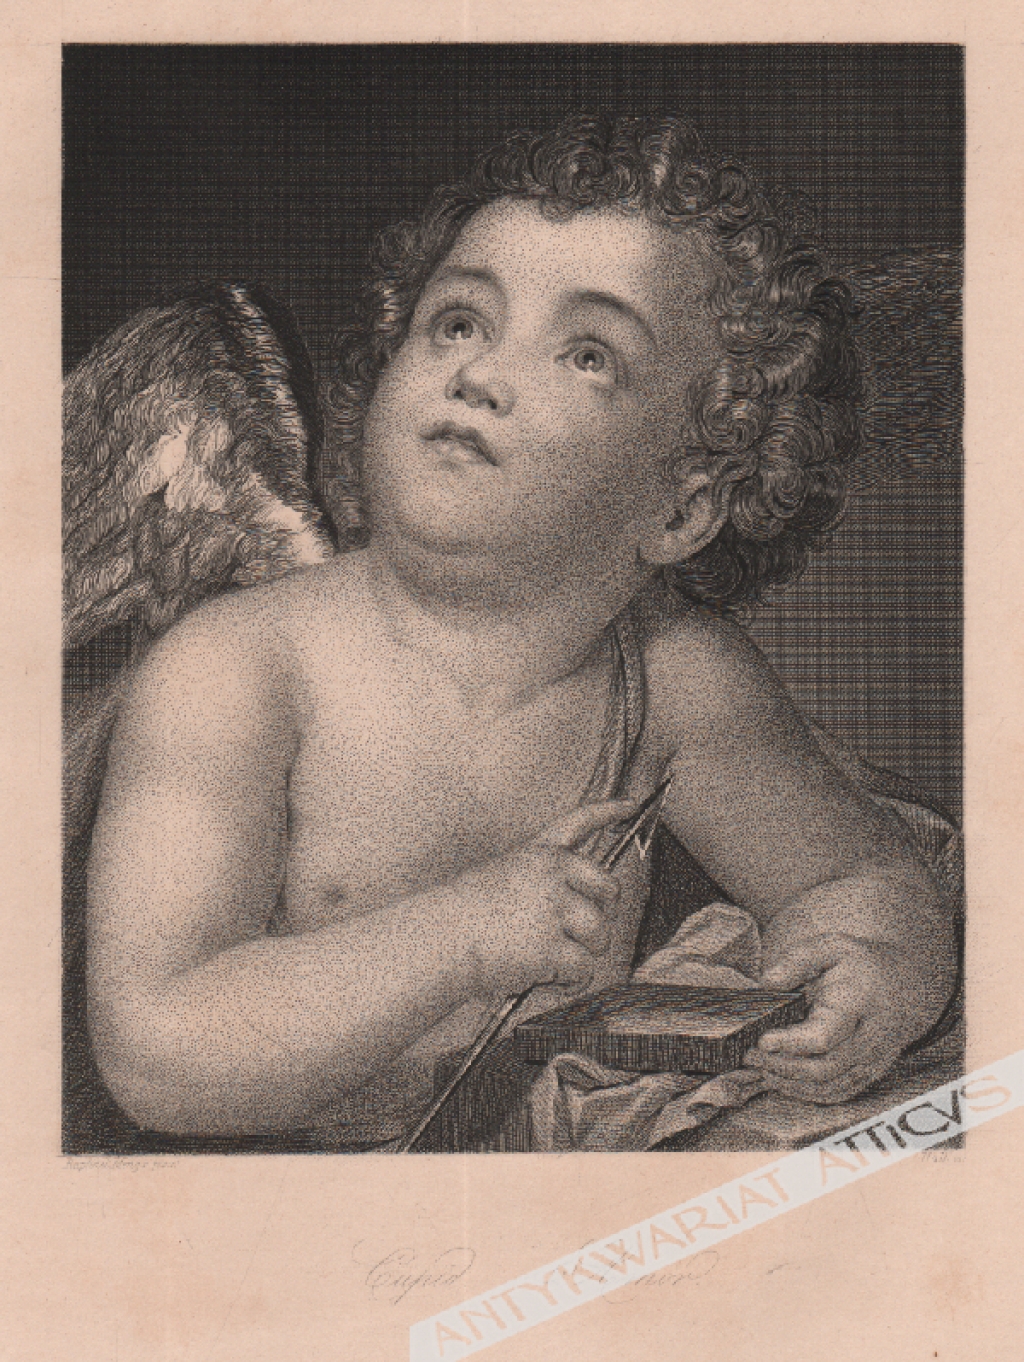 [rycina, ok. 1860] [Kupidyn] Cupid. Amor